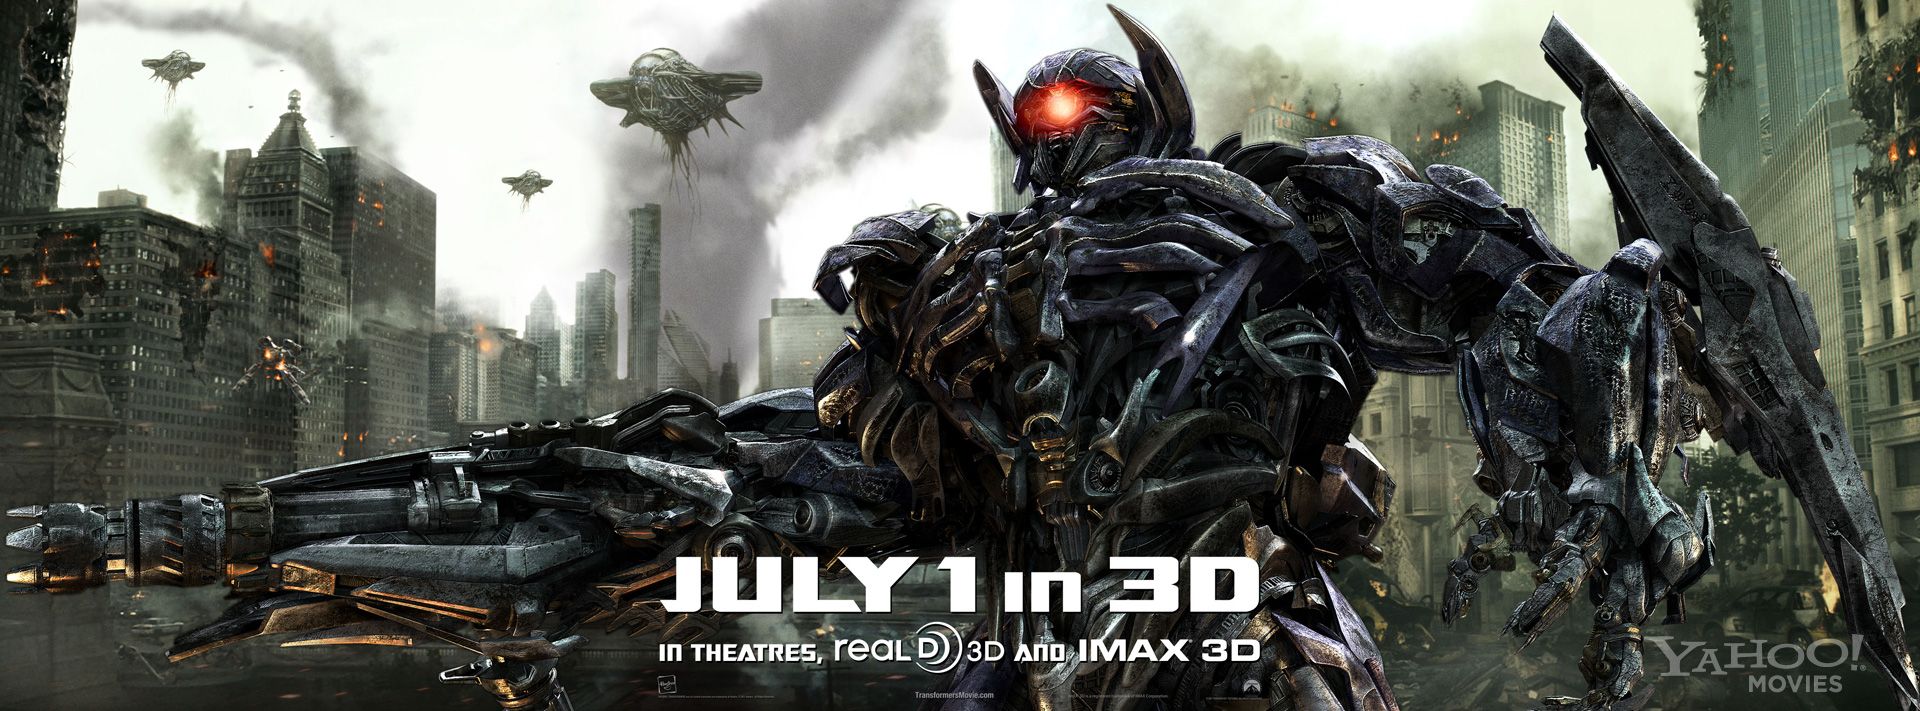 transformers-3-movie-poster-banner-shockwave-01.jpg